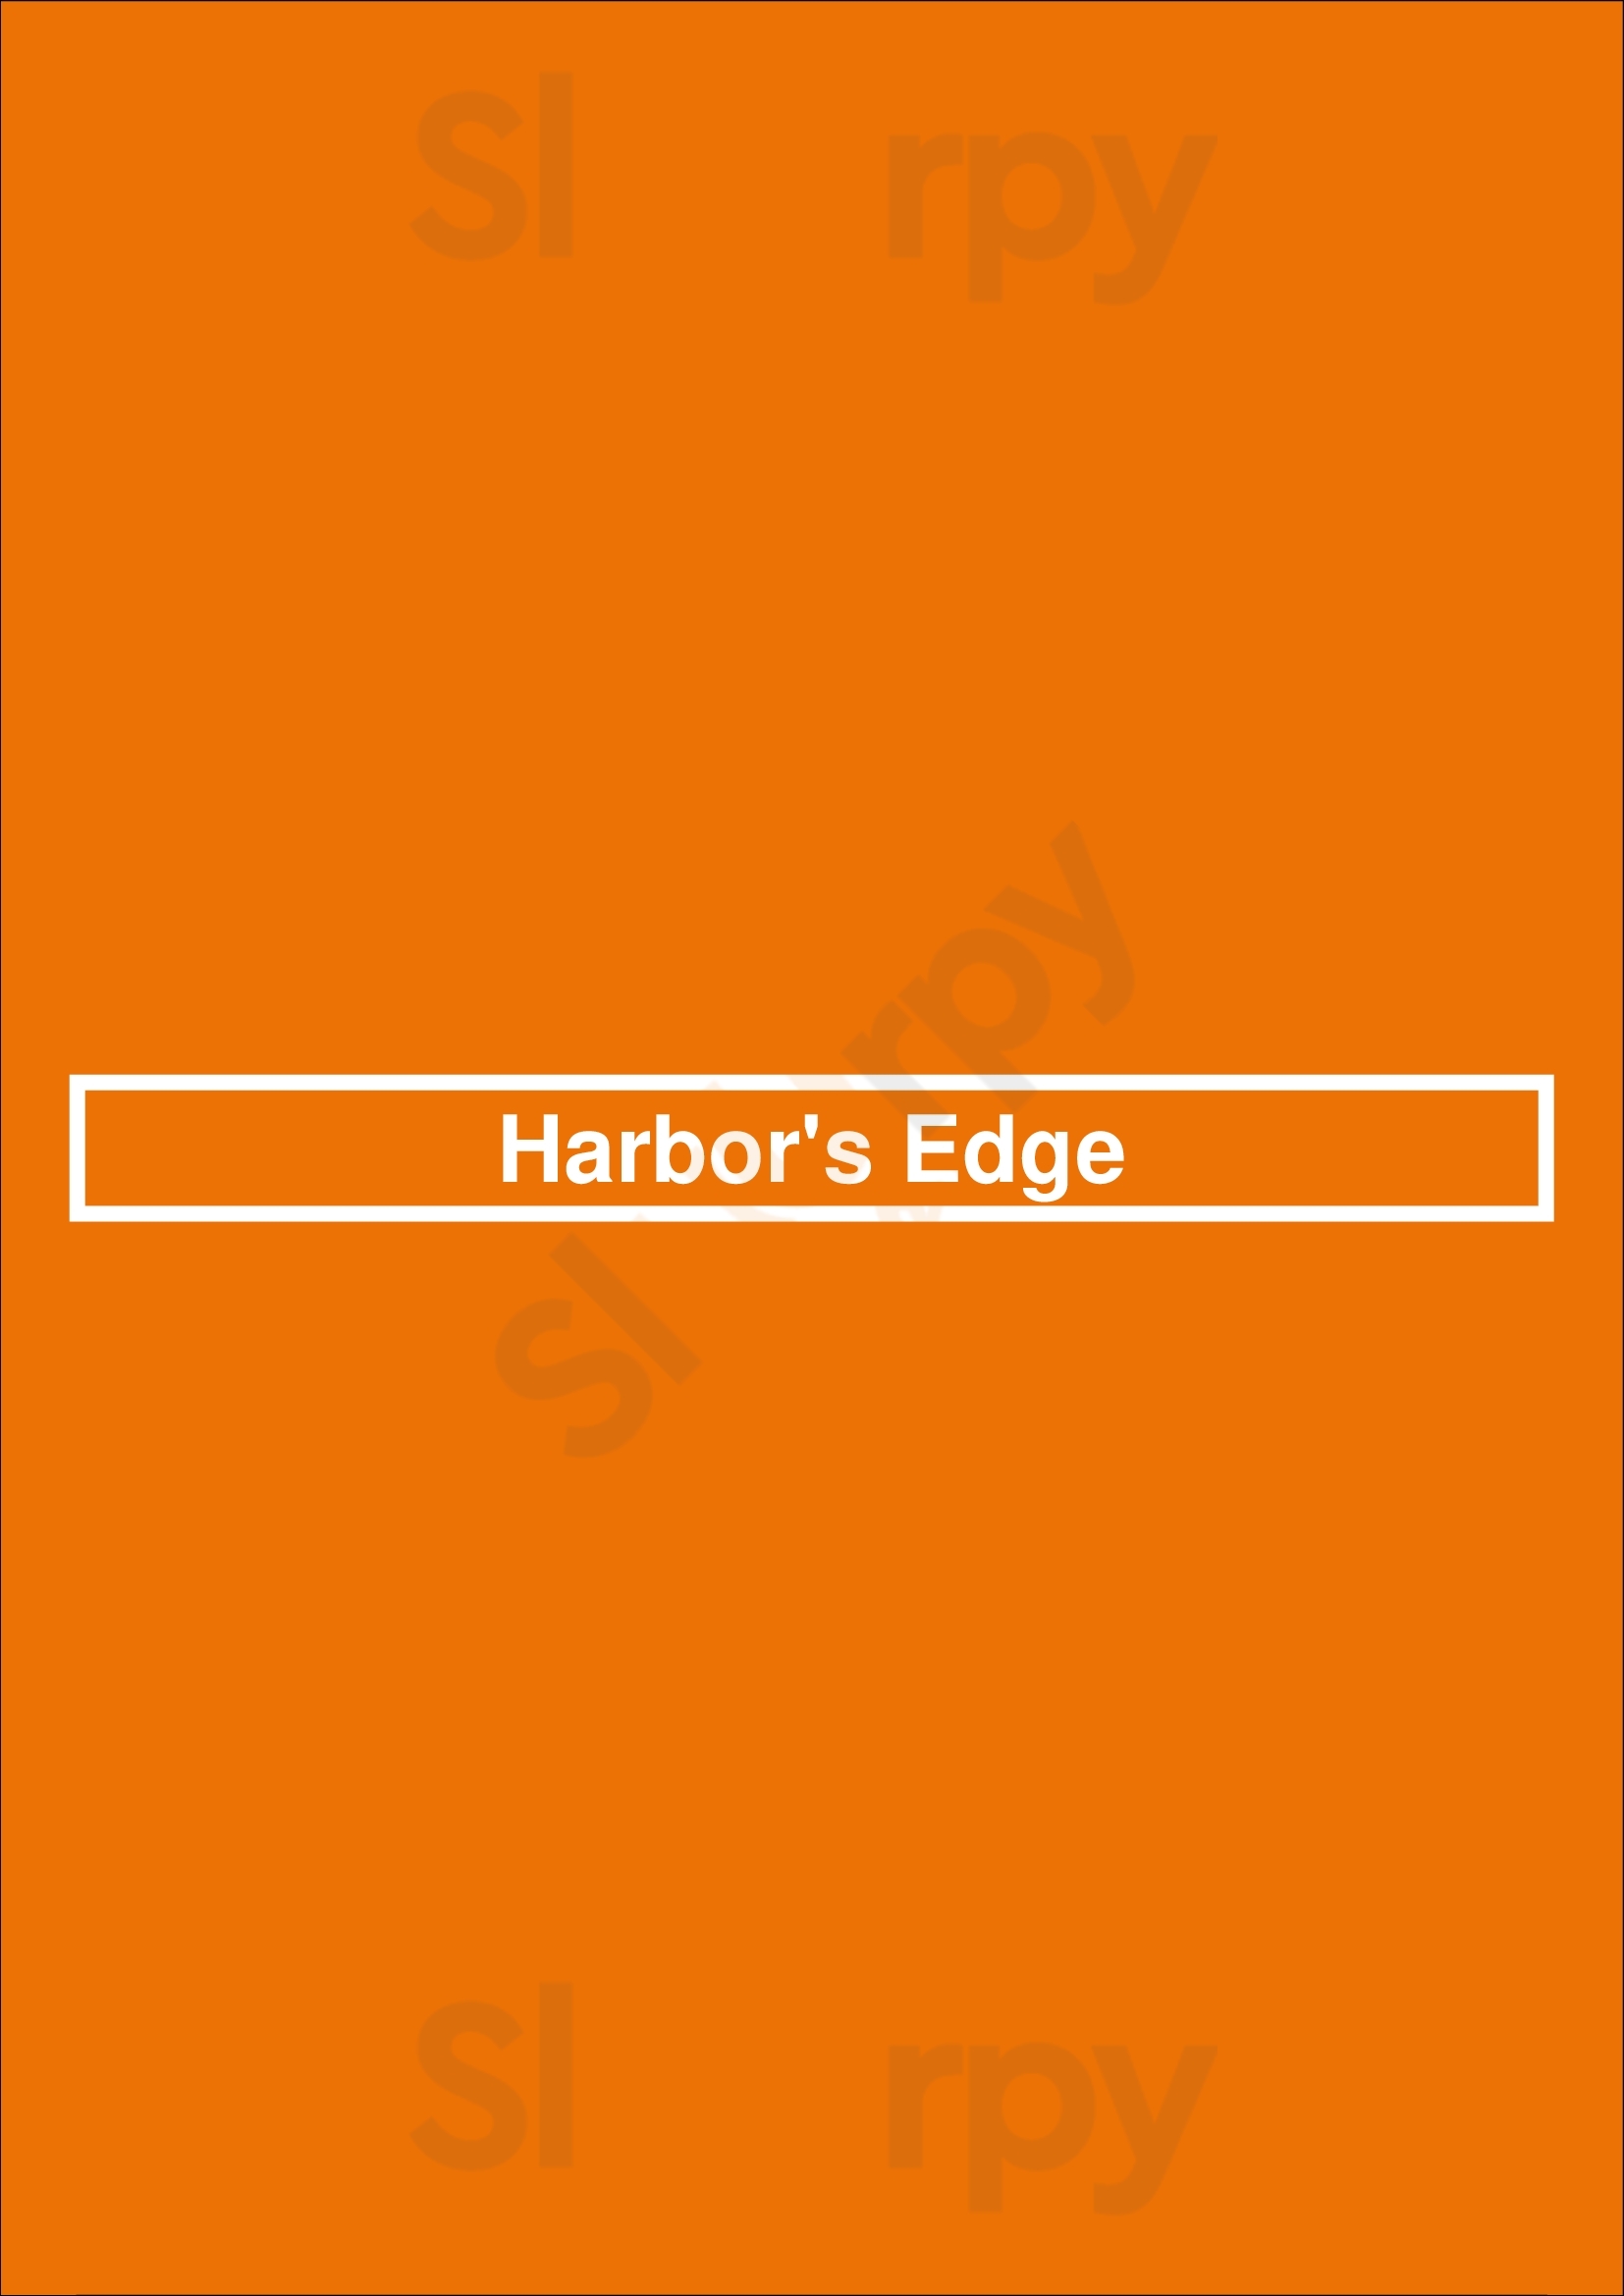 Harbor's Edge San Diego Menu - 1